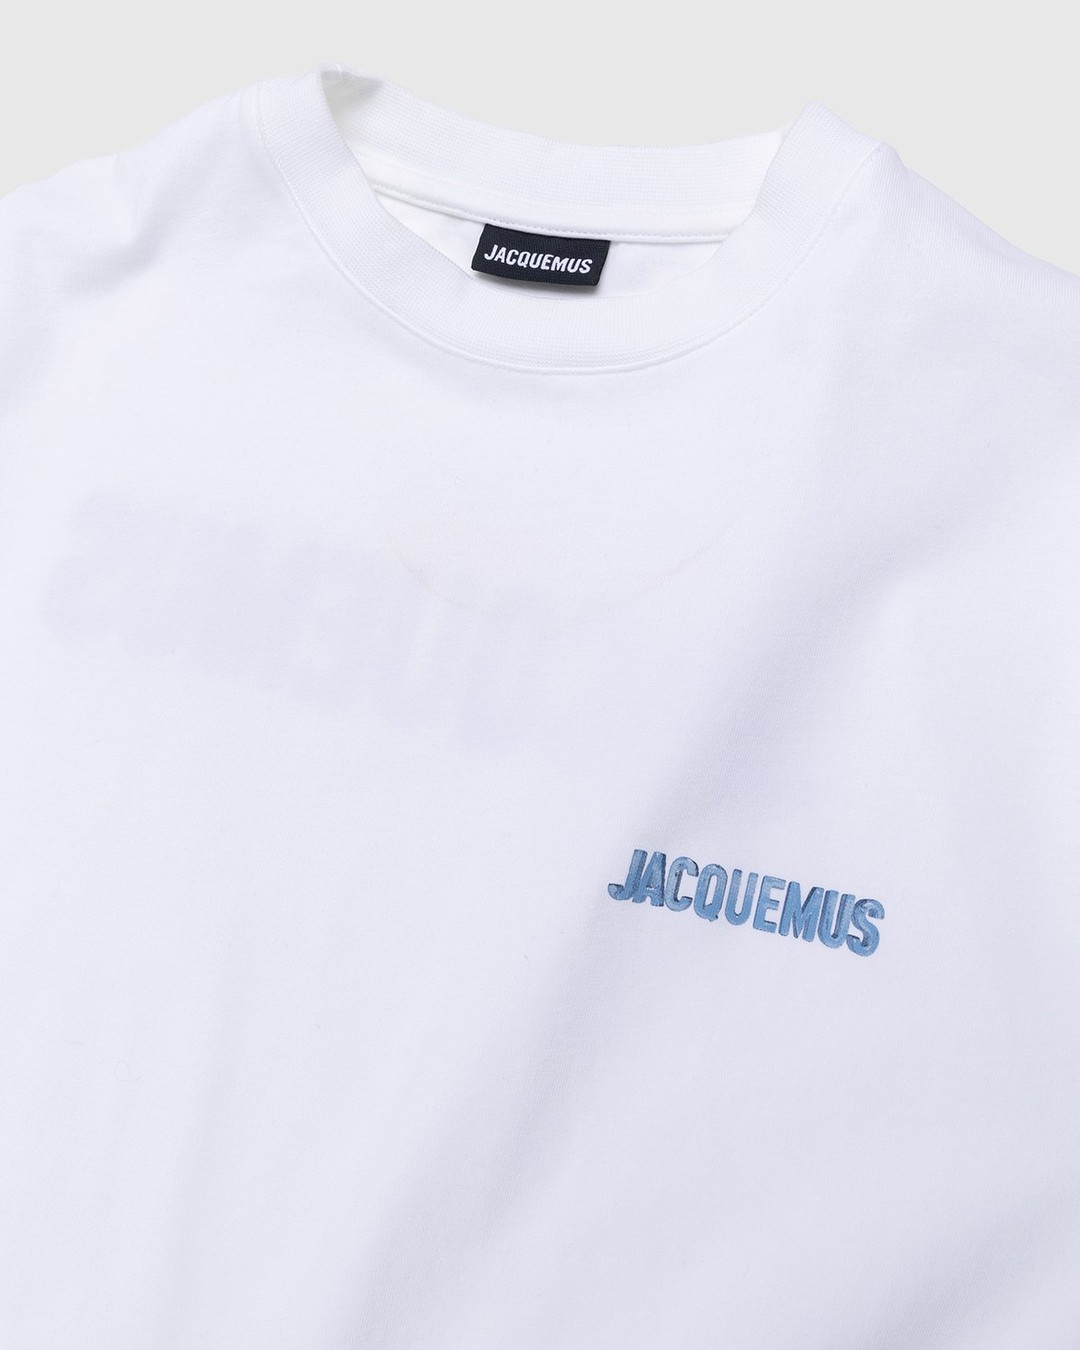 JACQUEMUS – Le T-Shirt Gelo Print Ice Jacquemus White - Longsleeves - White - Image 3